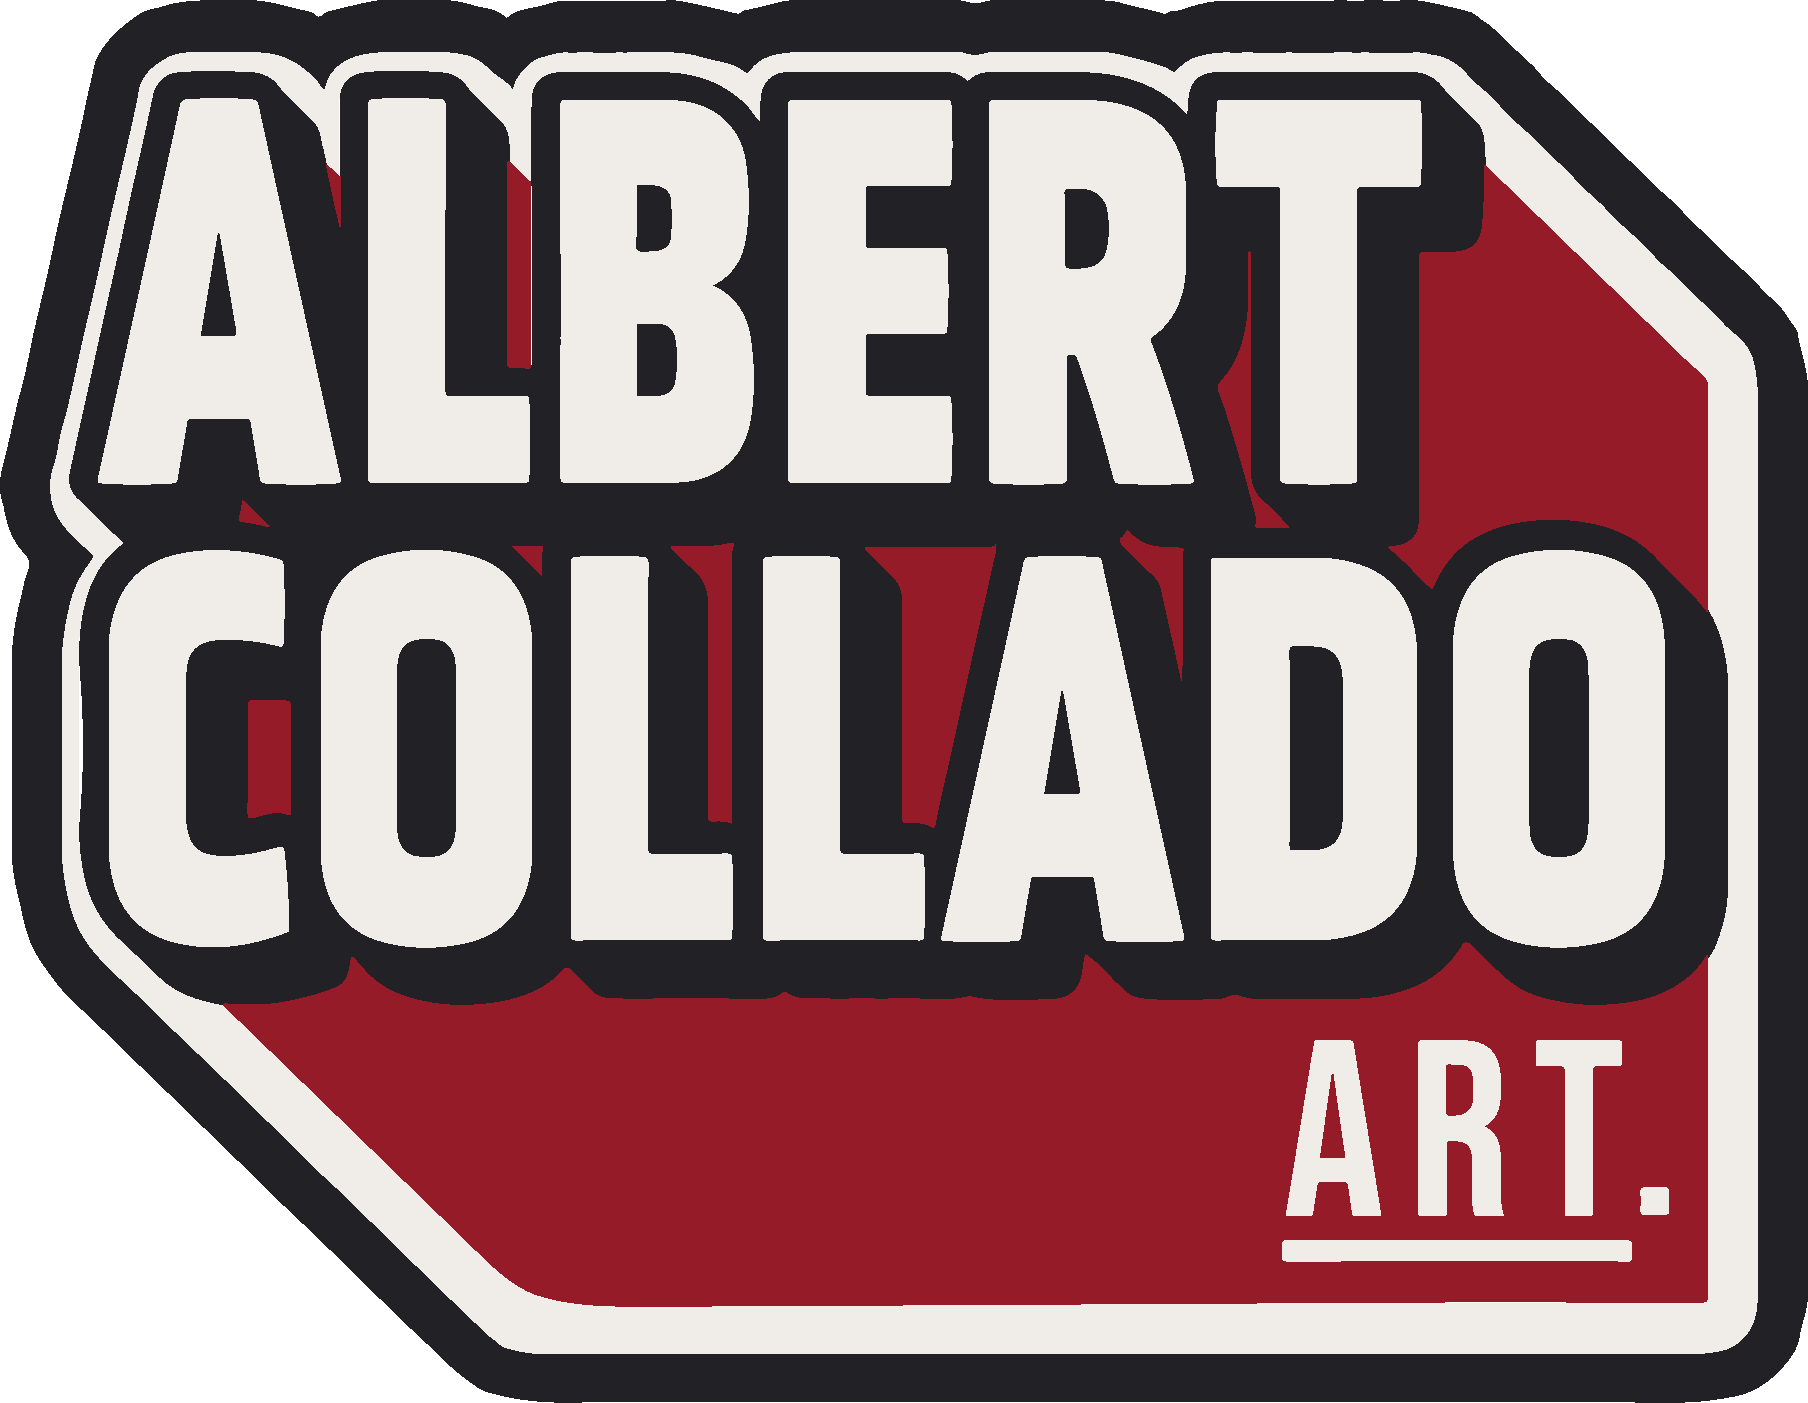 Albert Collado Art